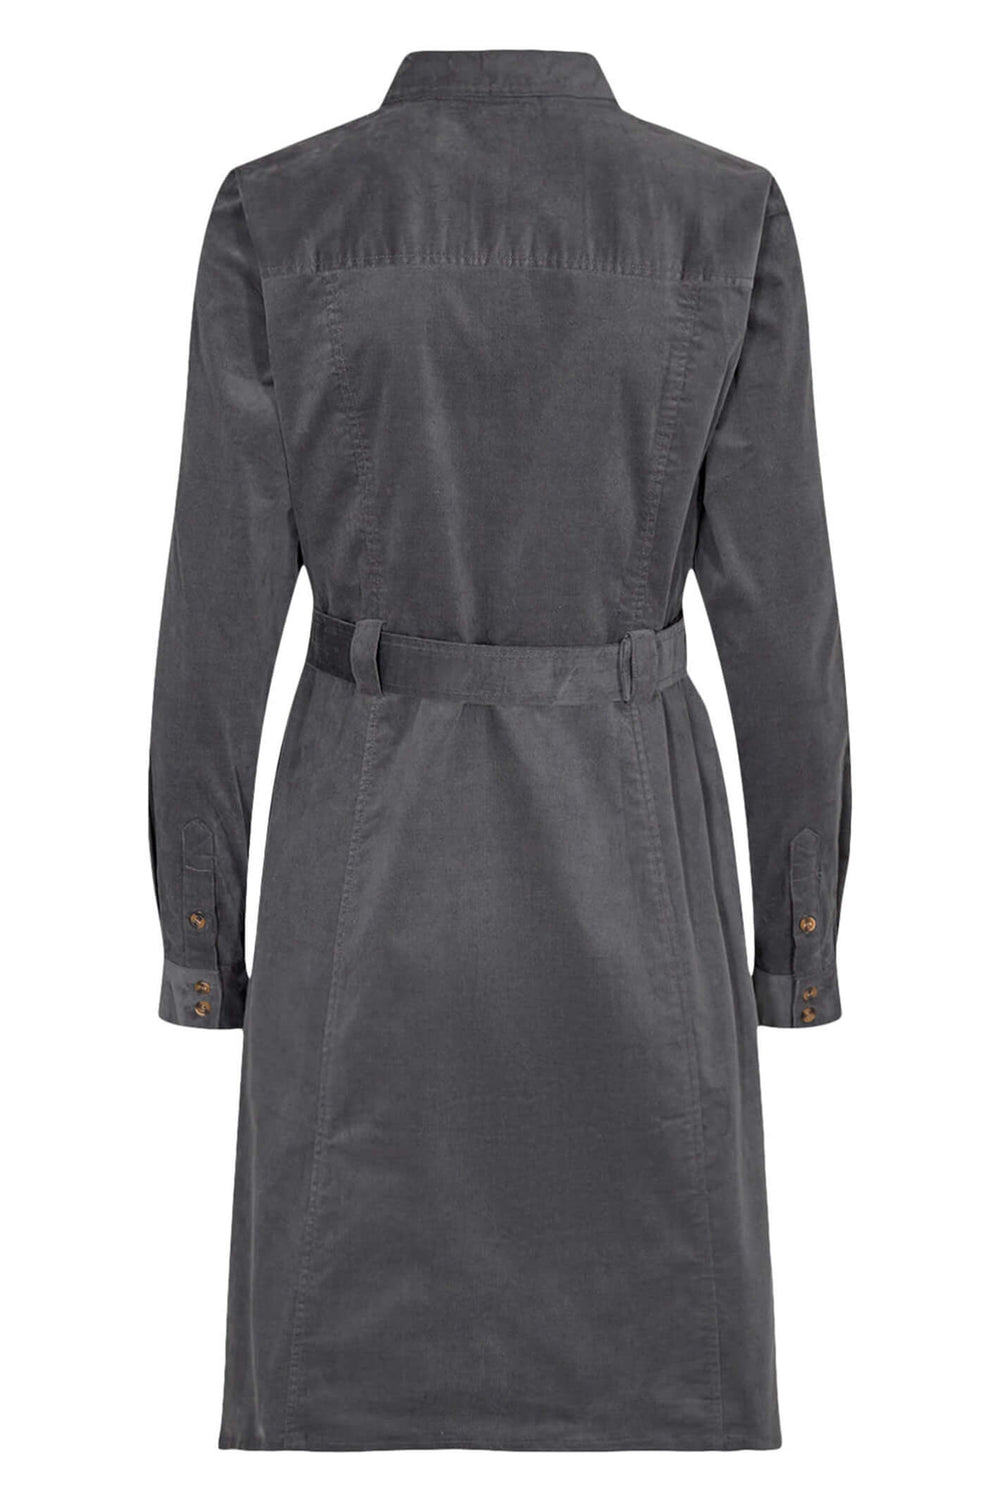 Numph 700819 Numaurya 0532 Grey Iron Gate Dress - Shirley Allum